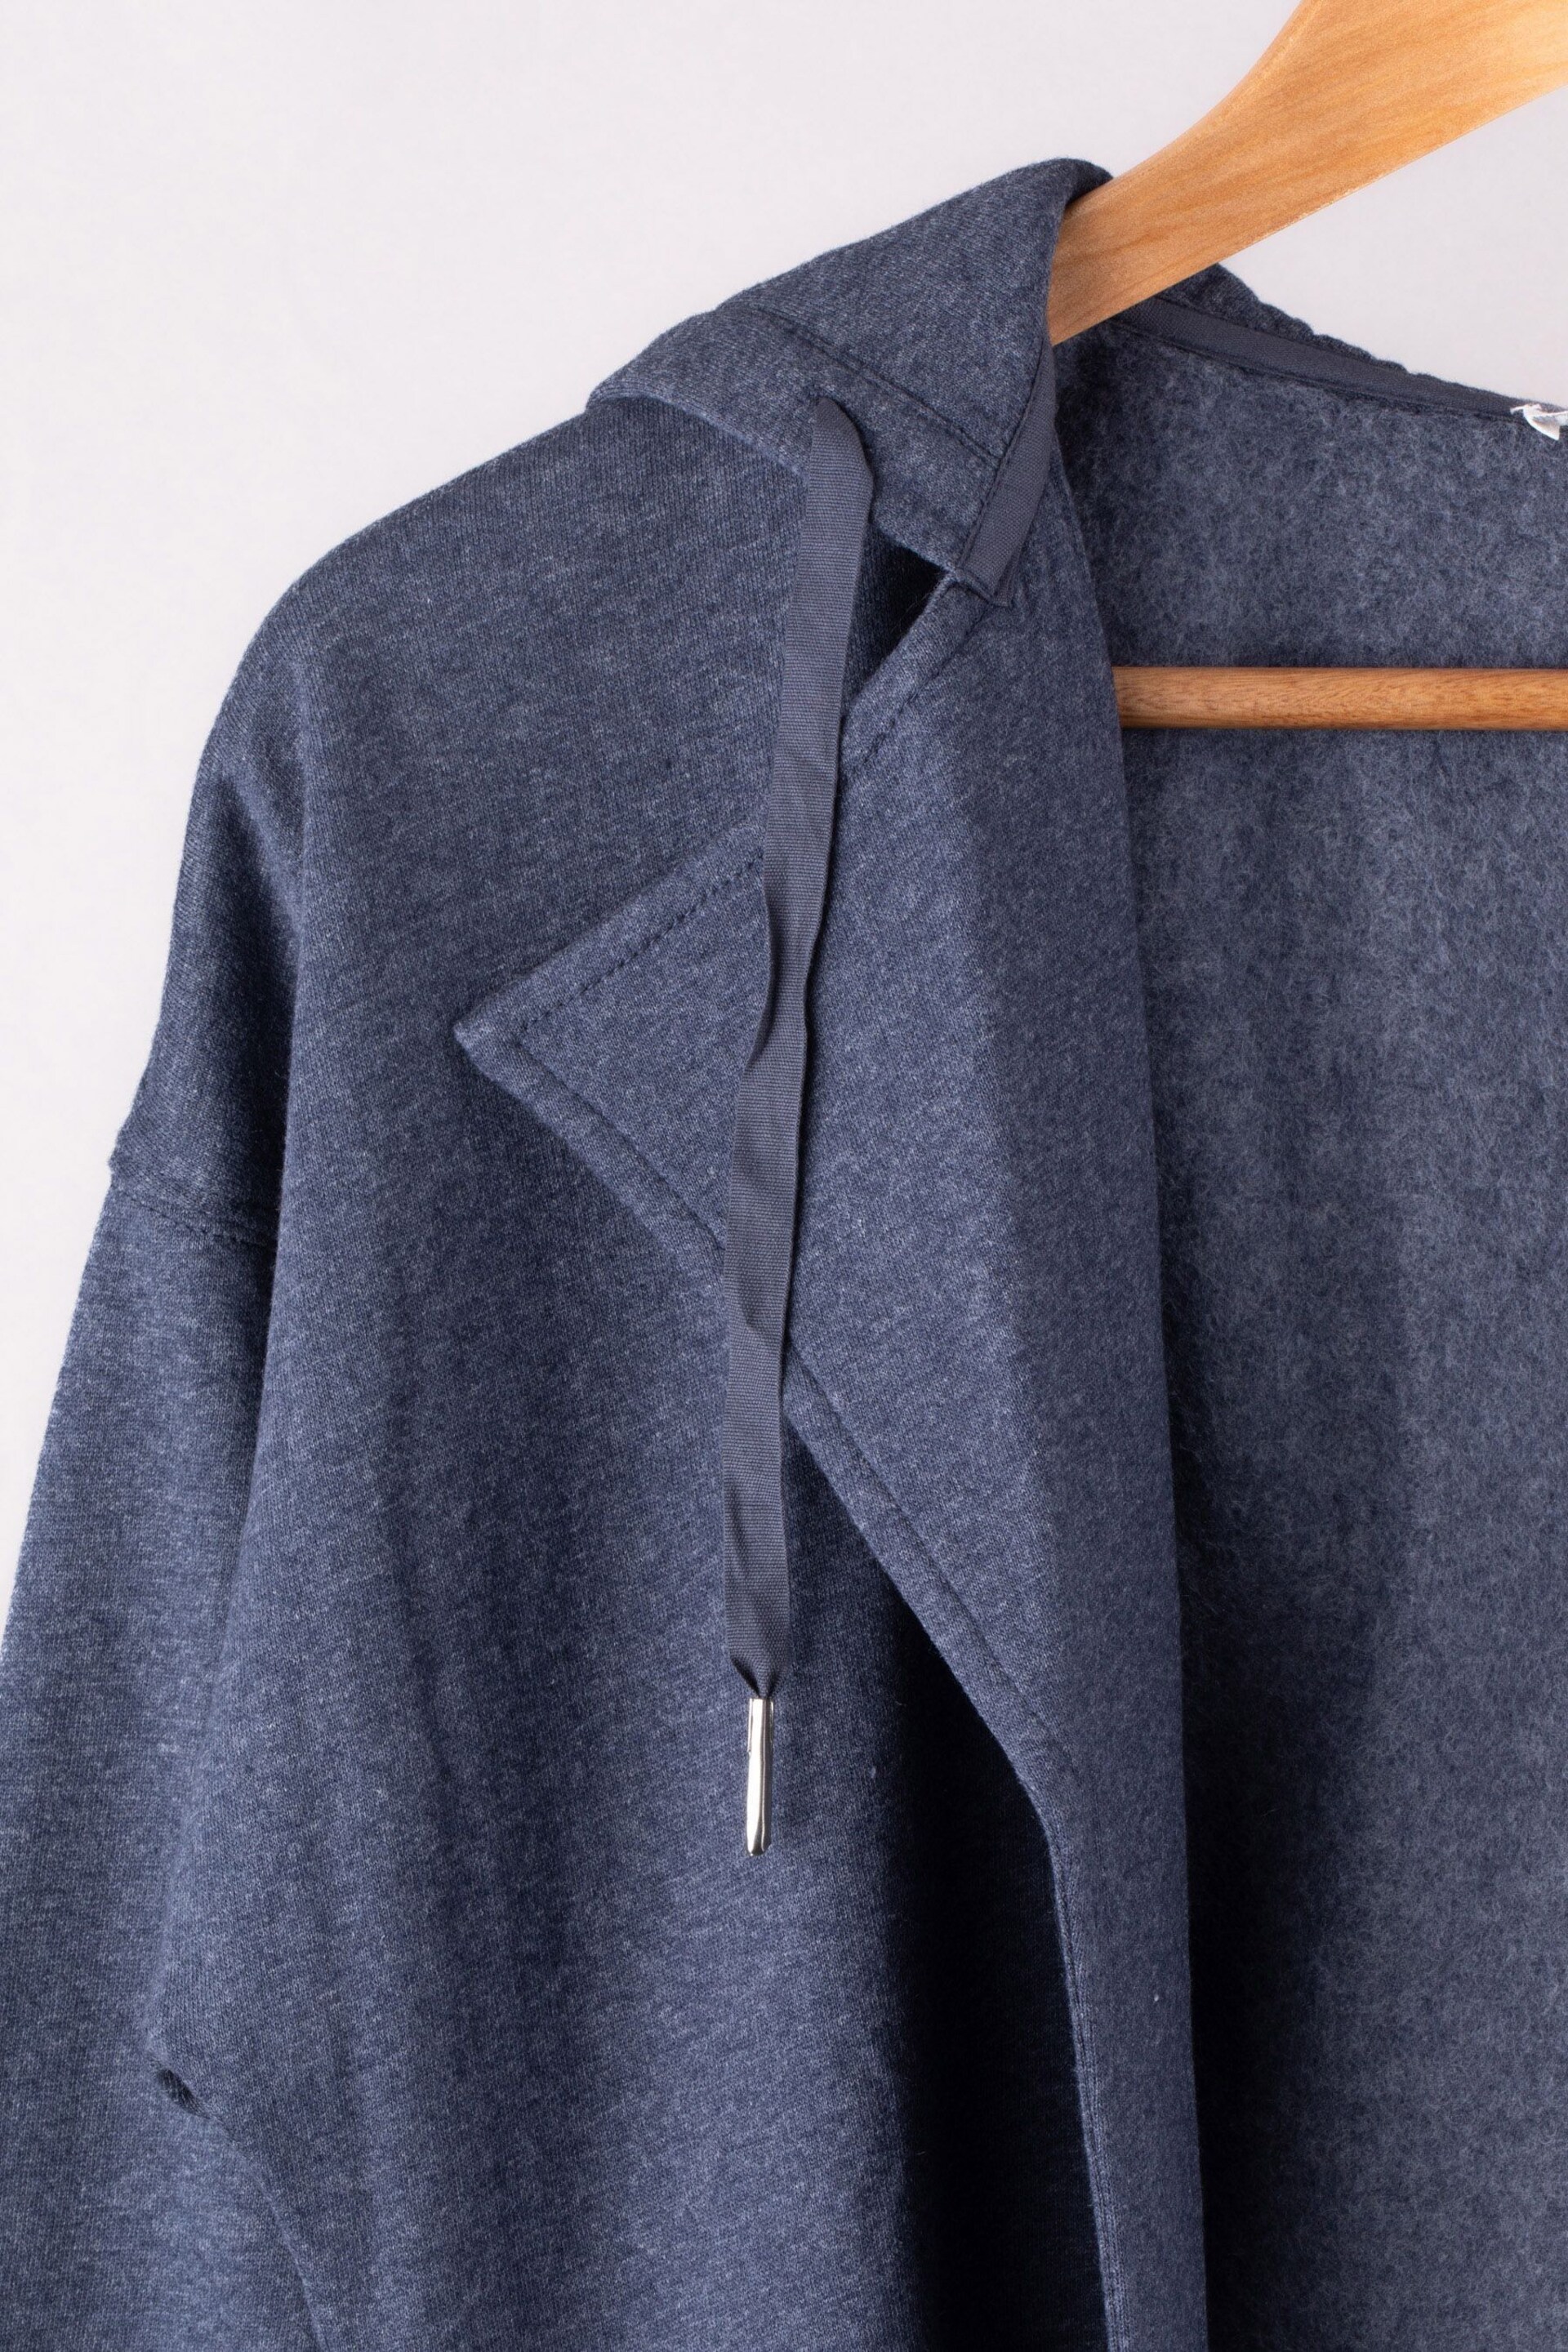 Lakeland Leather Blue Chloe Hooded Fleece Jersey Jacket - Image 10 of 11